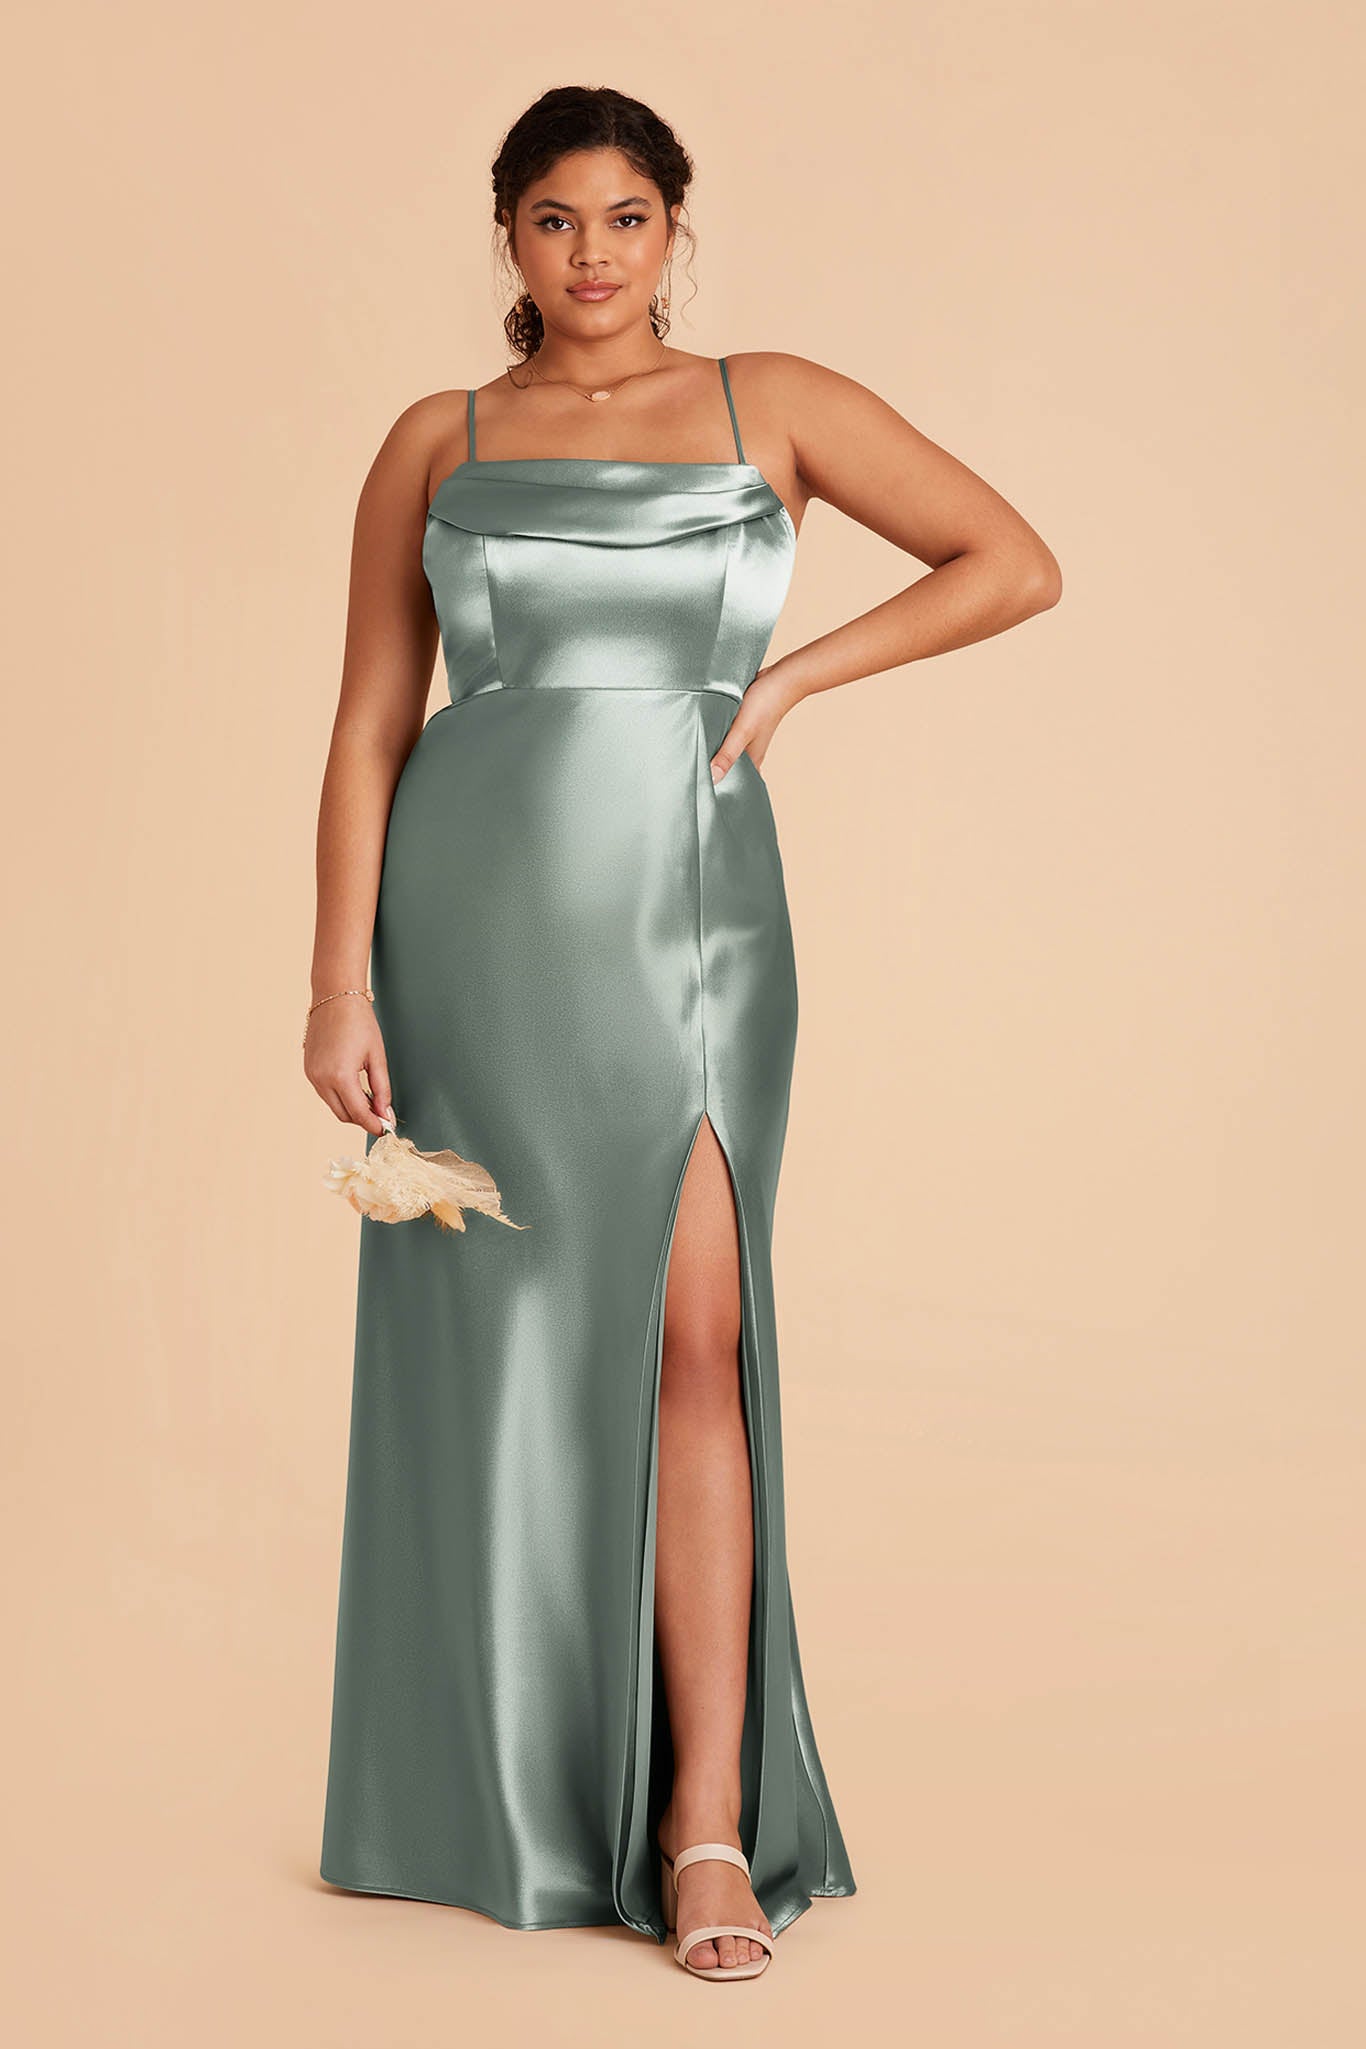 Sea Glass Mia Convertible Dress by Birdy Grey